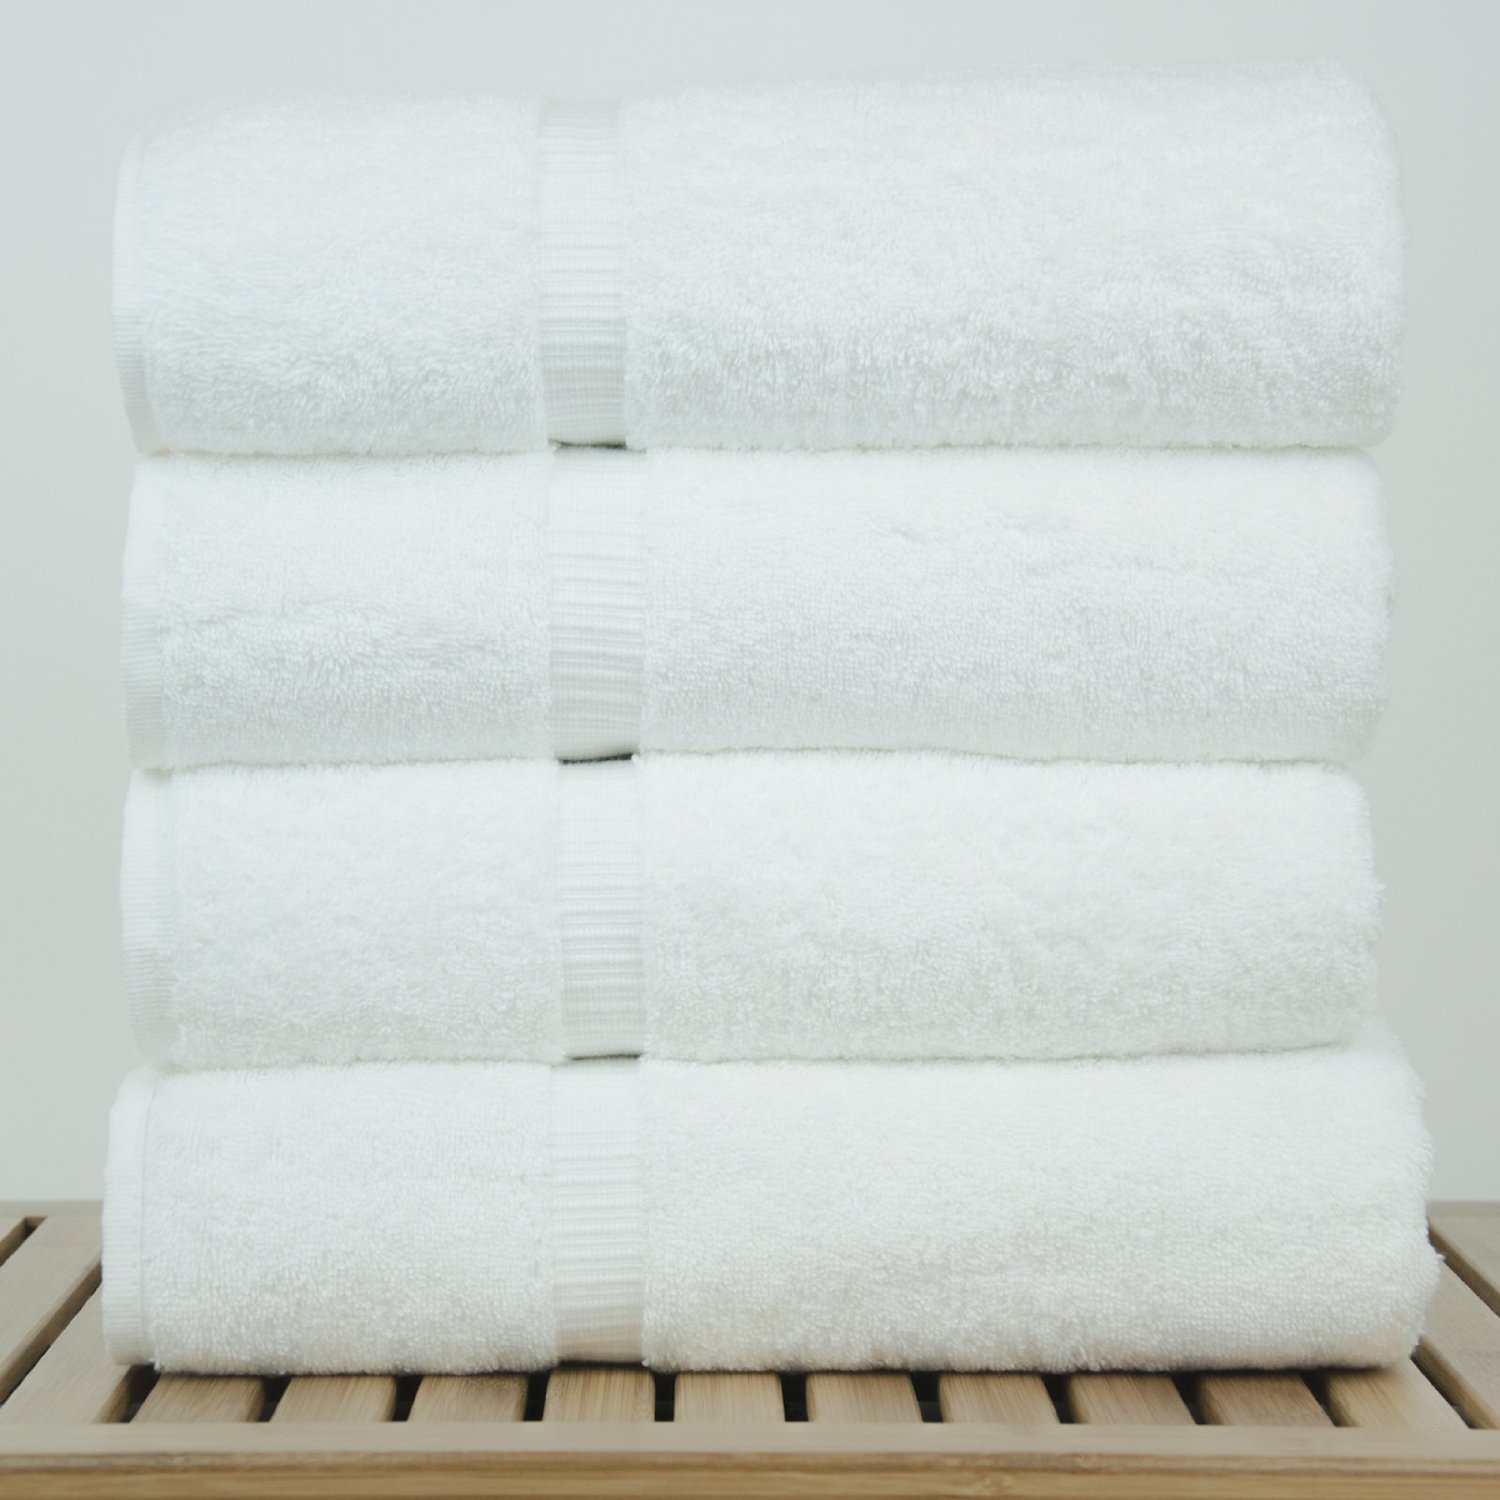 27"x54" - 17 lbs/doz - %100 Turkish Cotton White Bath Towel - Dobby Border-Robemart.com